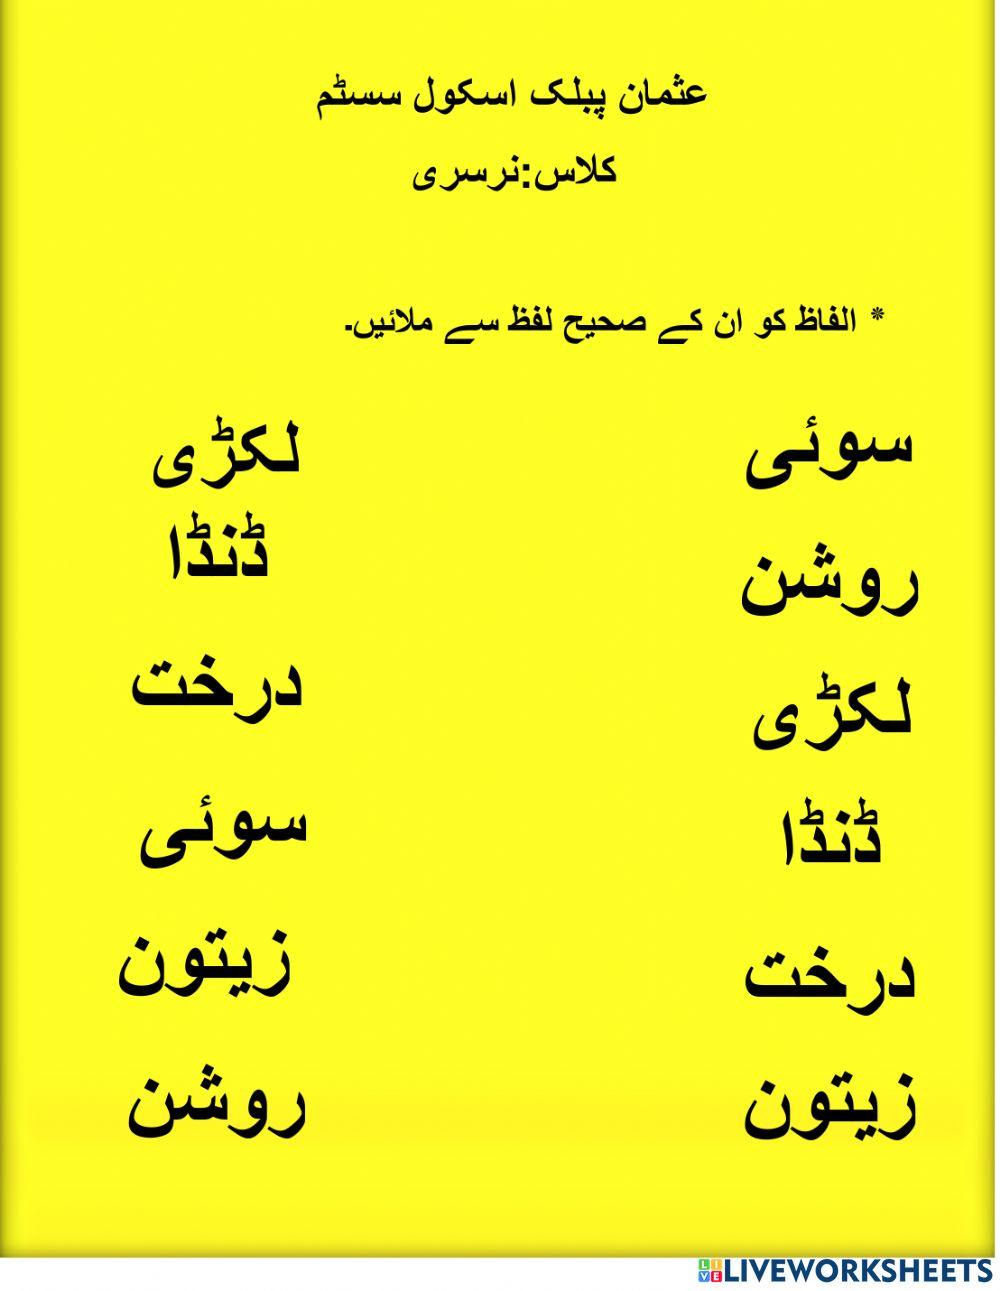 Urdu sight words